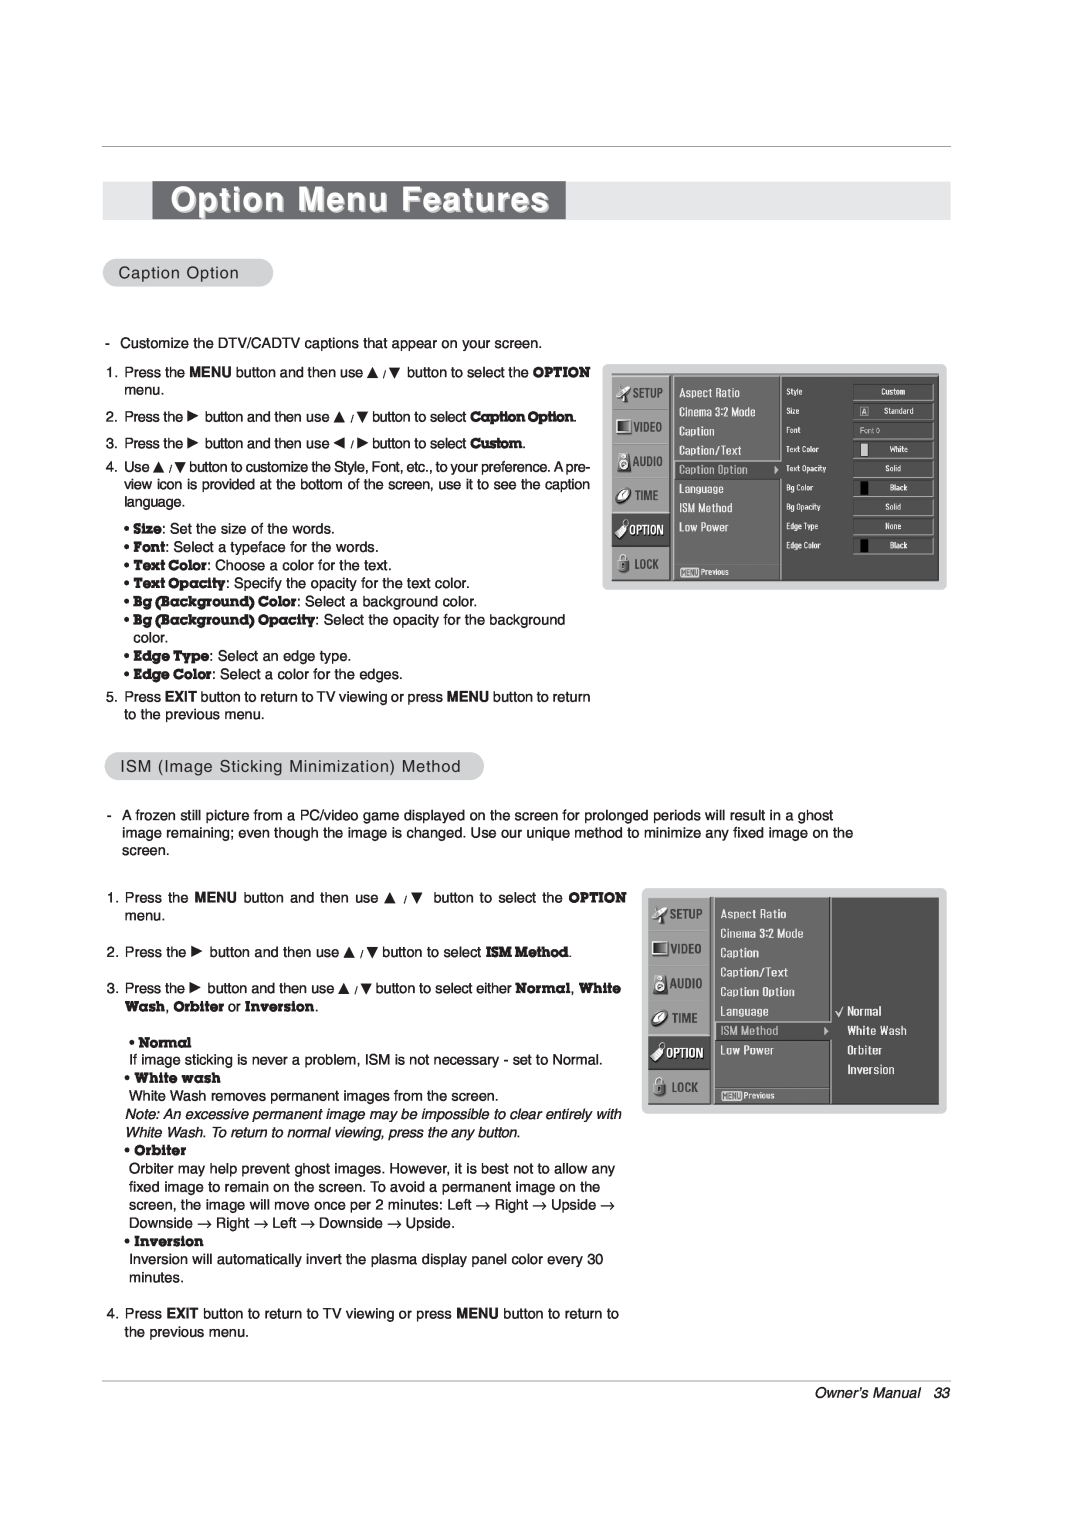 LG Electronics 42PX7DC Option Menu Features, Caption Option, ISM Image Sticking Minimization Method, Owner’s Manual 